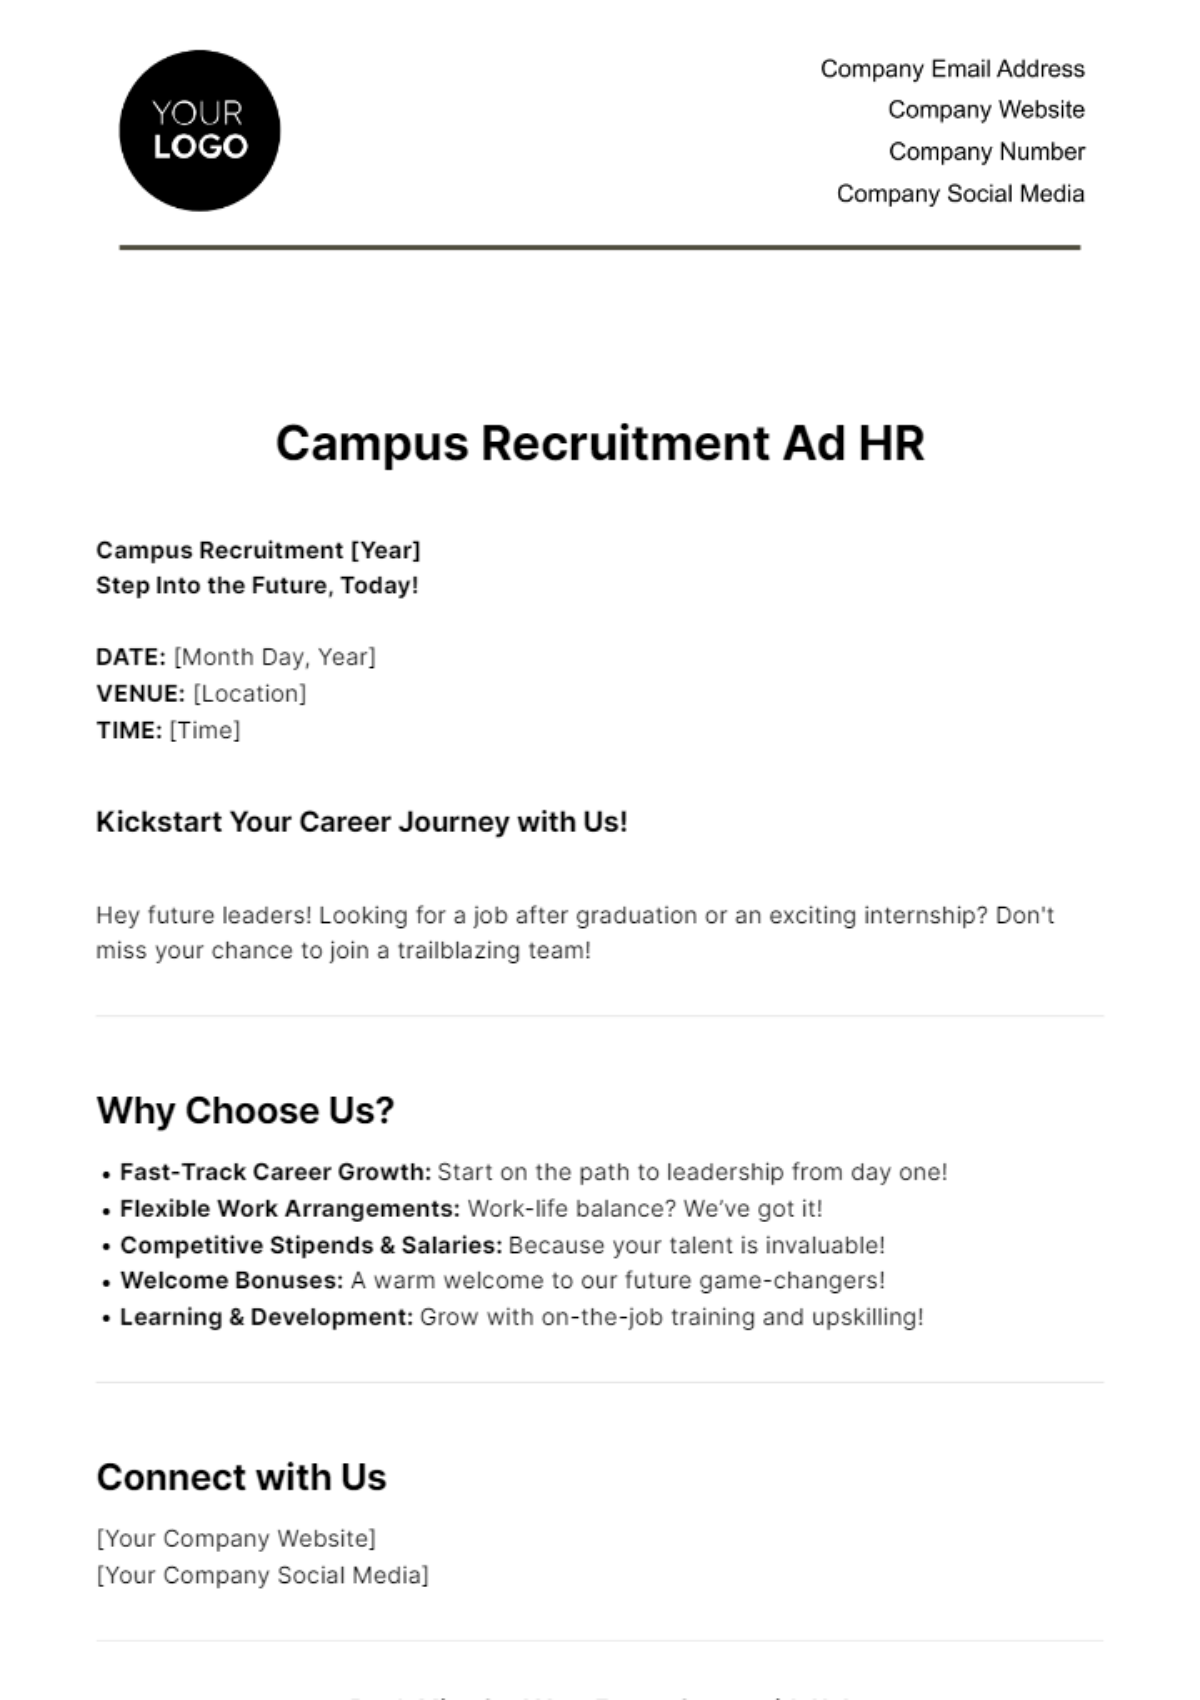 Employee Recruitment Ad HR Template